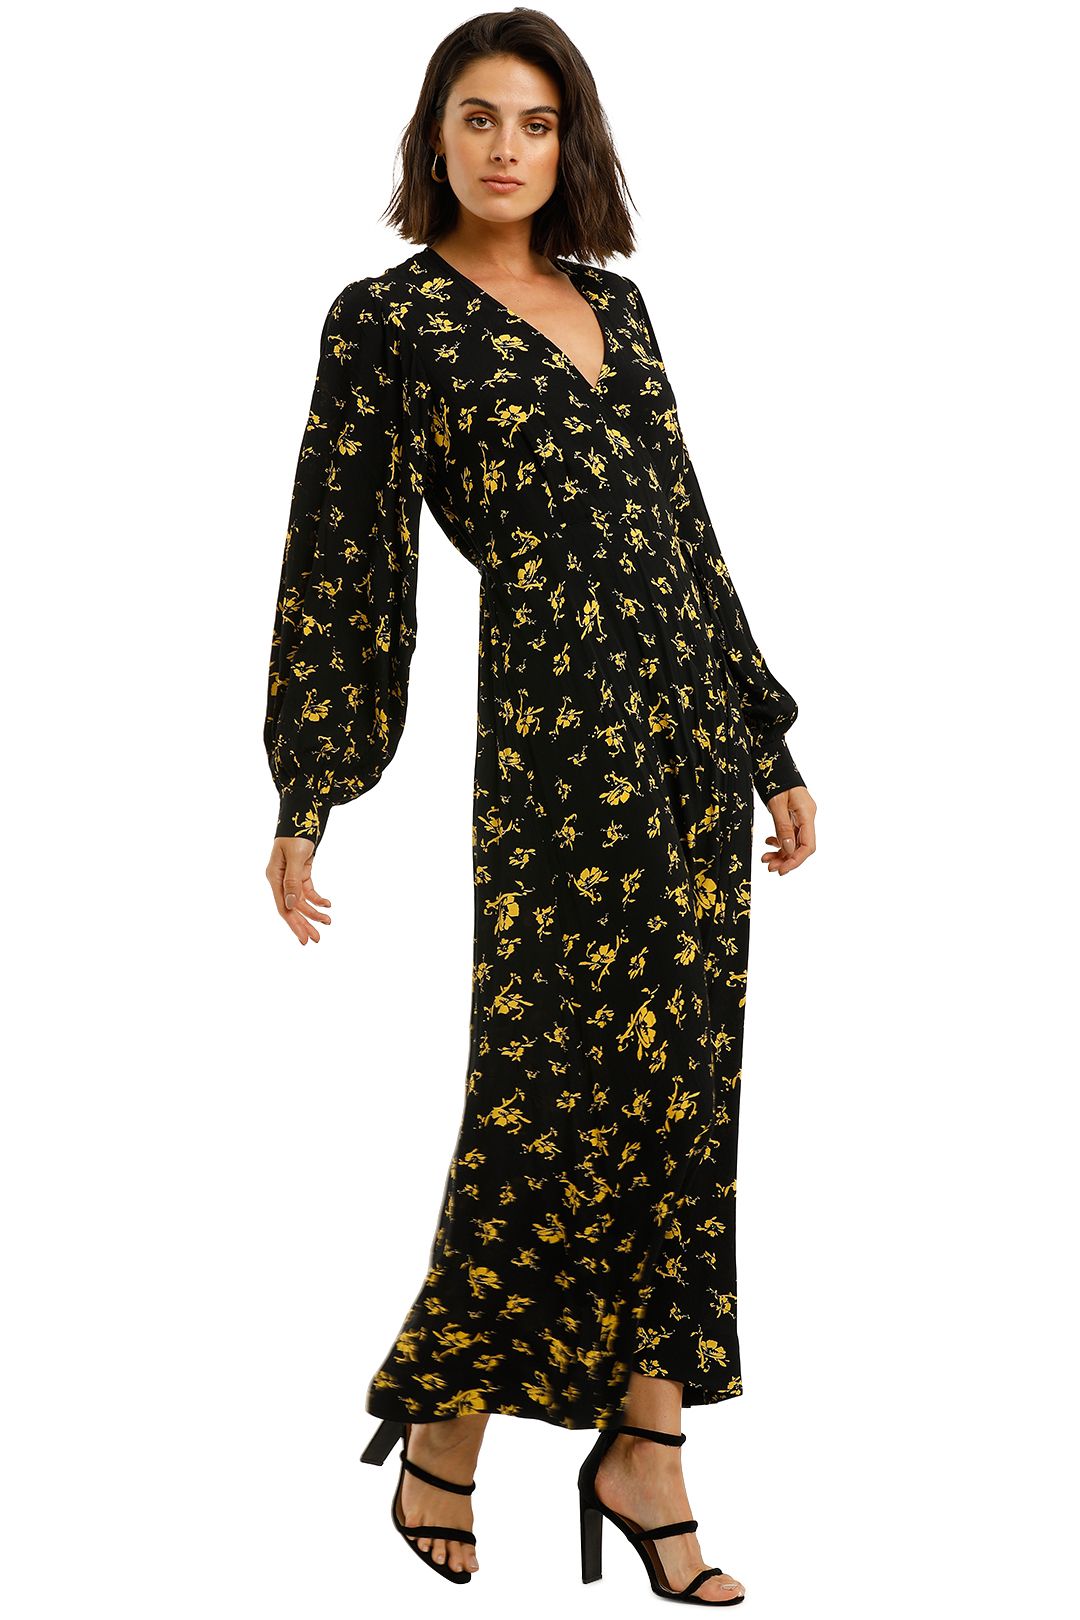 Ganni-Printed-Crepe-LS-Long-Dress-Black-Yellow-Side